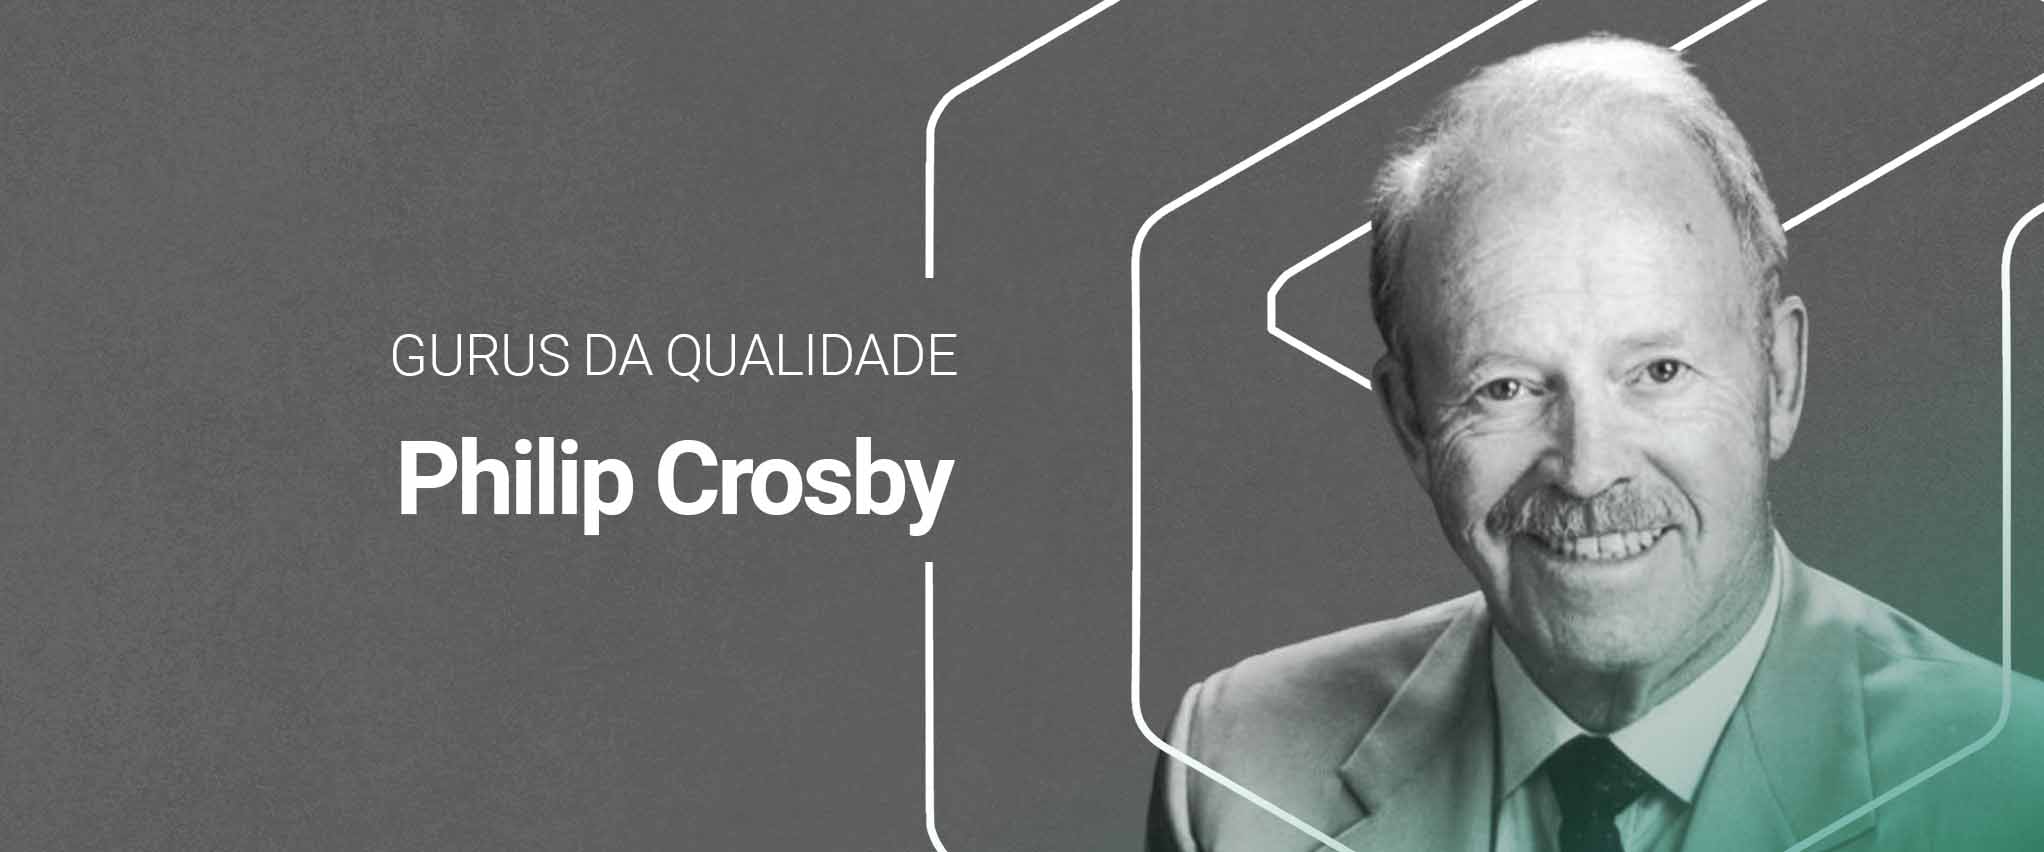 Gurus da Qualidade: Philip Crosby